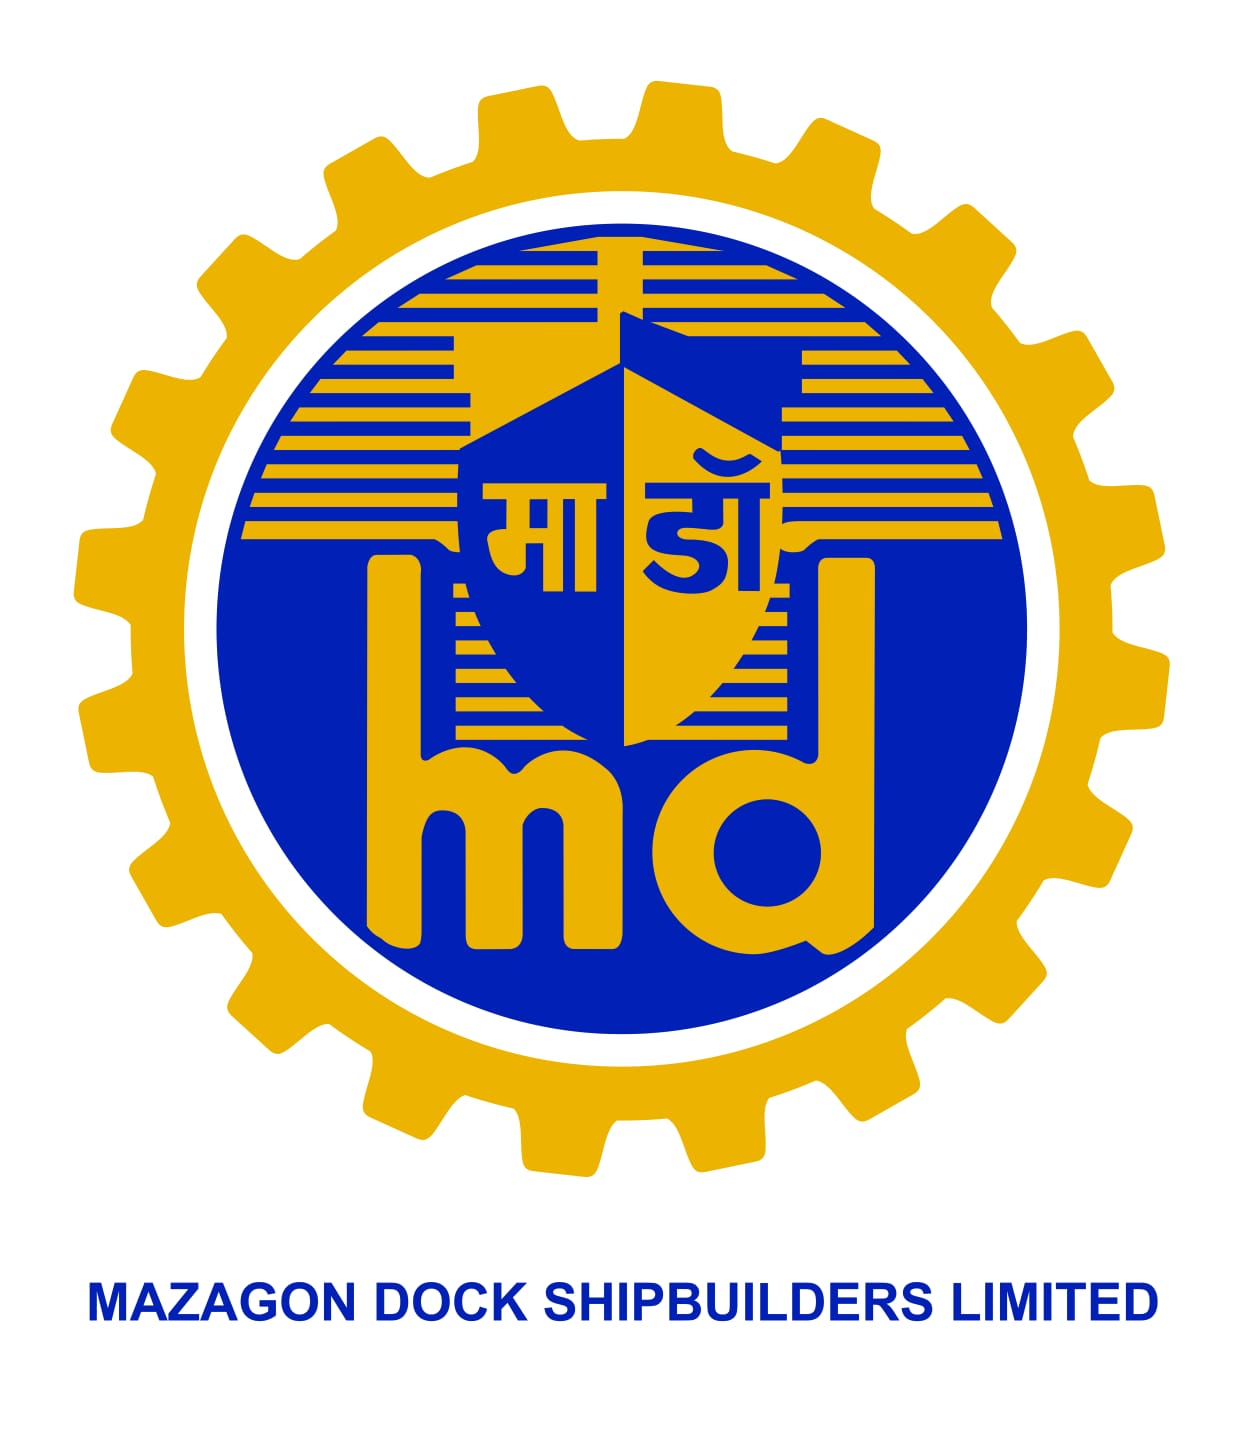 Mazagaon Dock Shipbuilders Limited